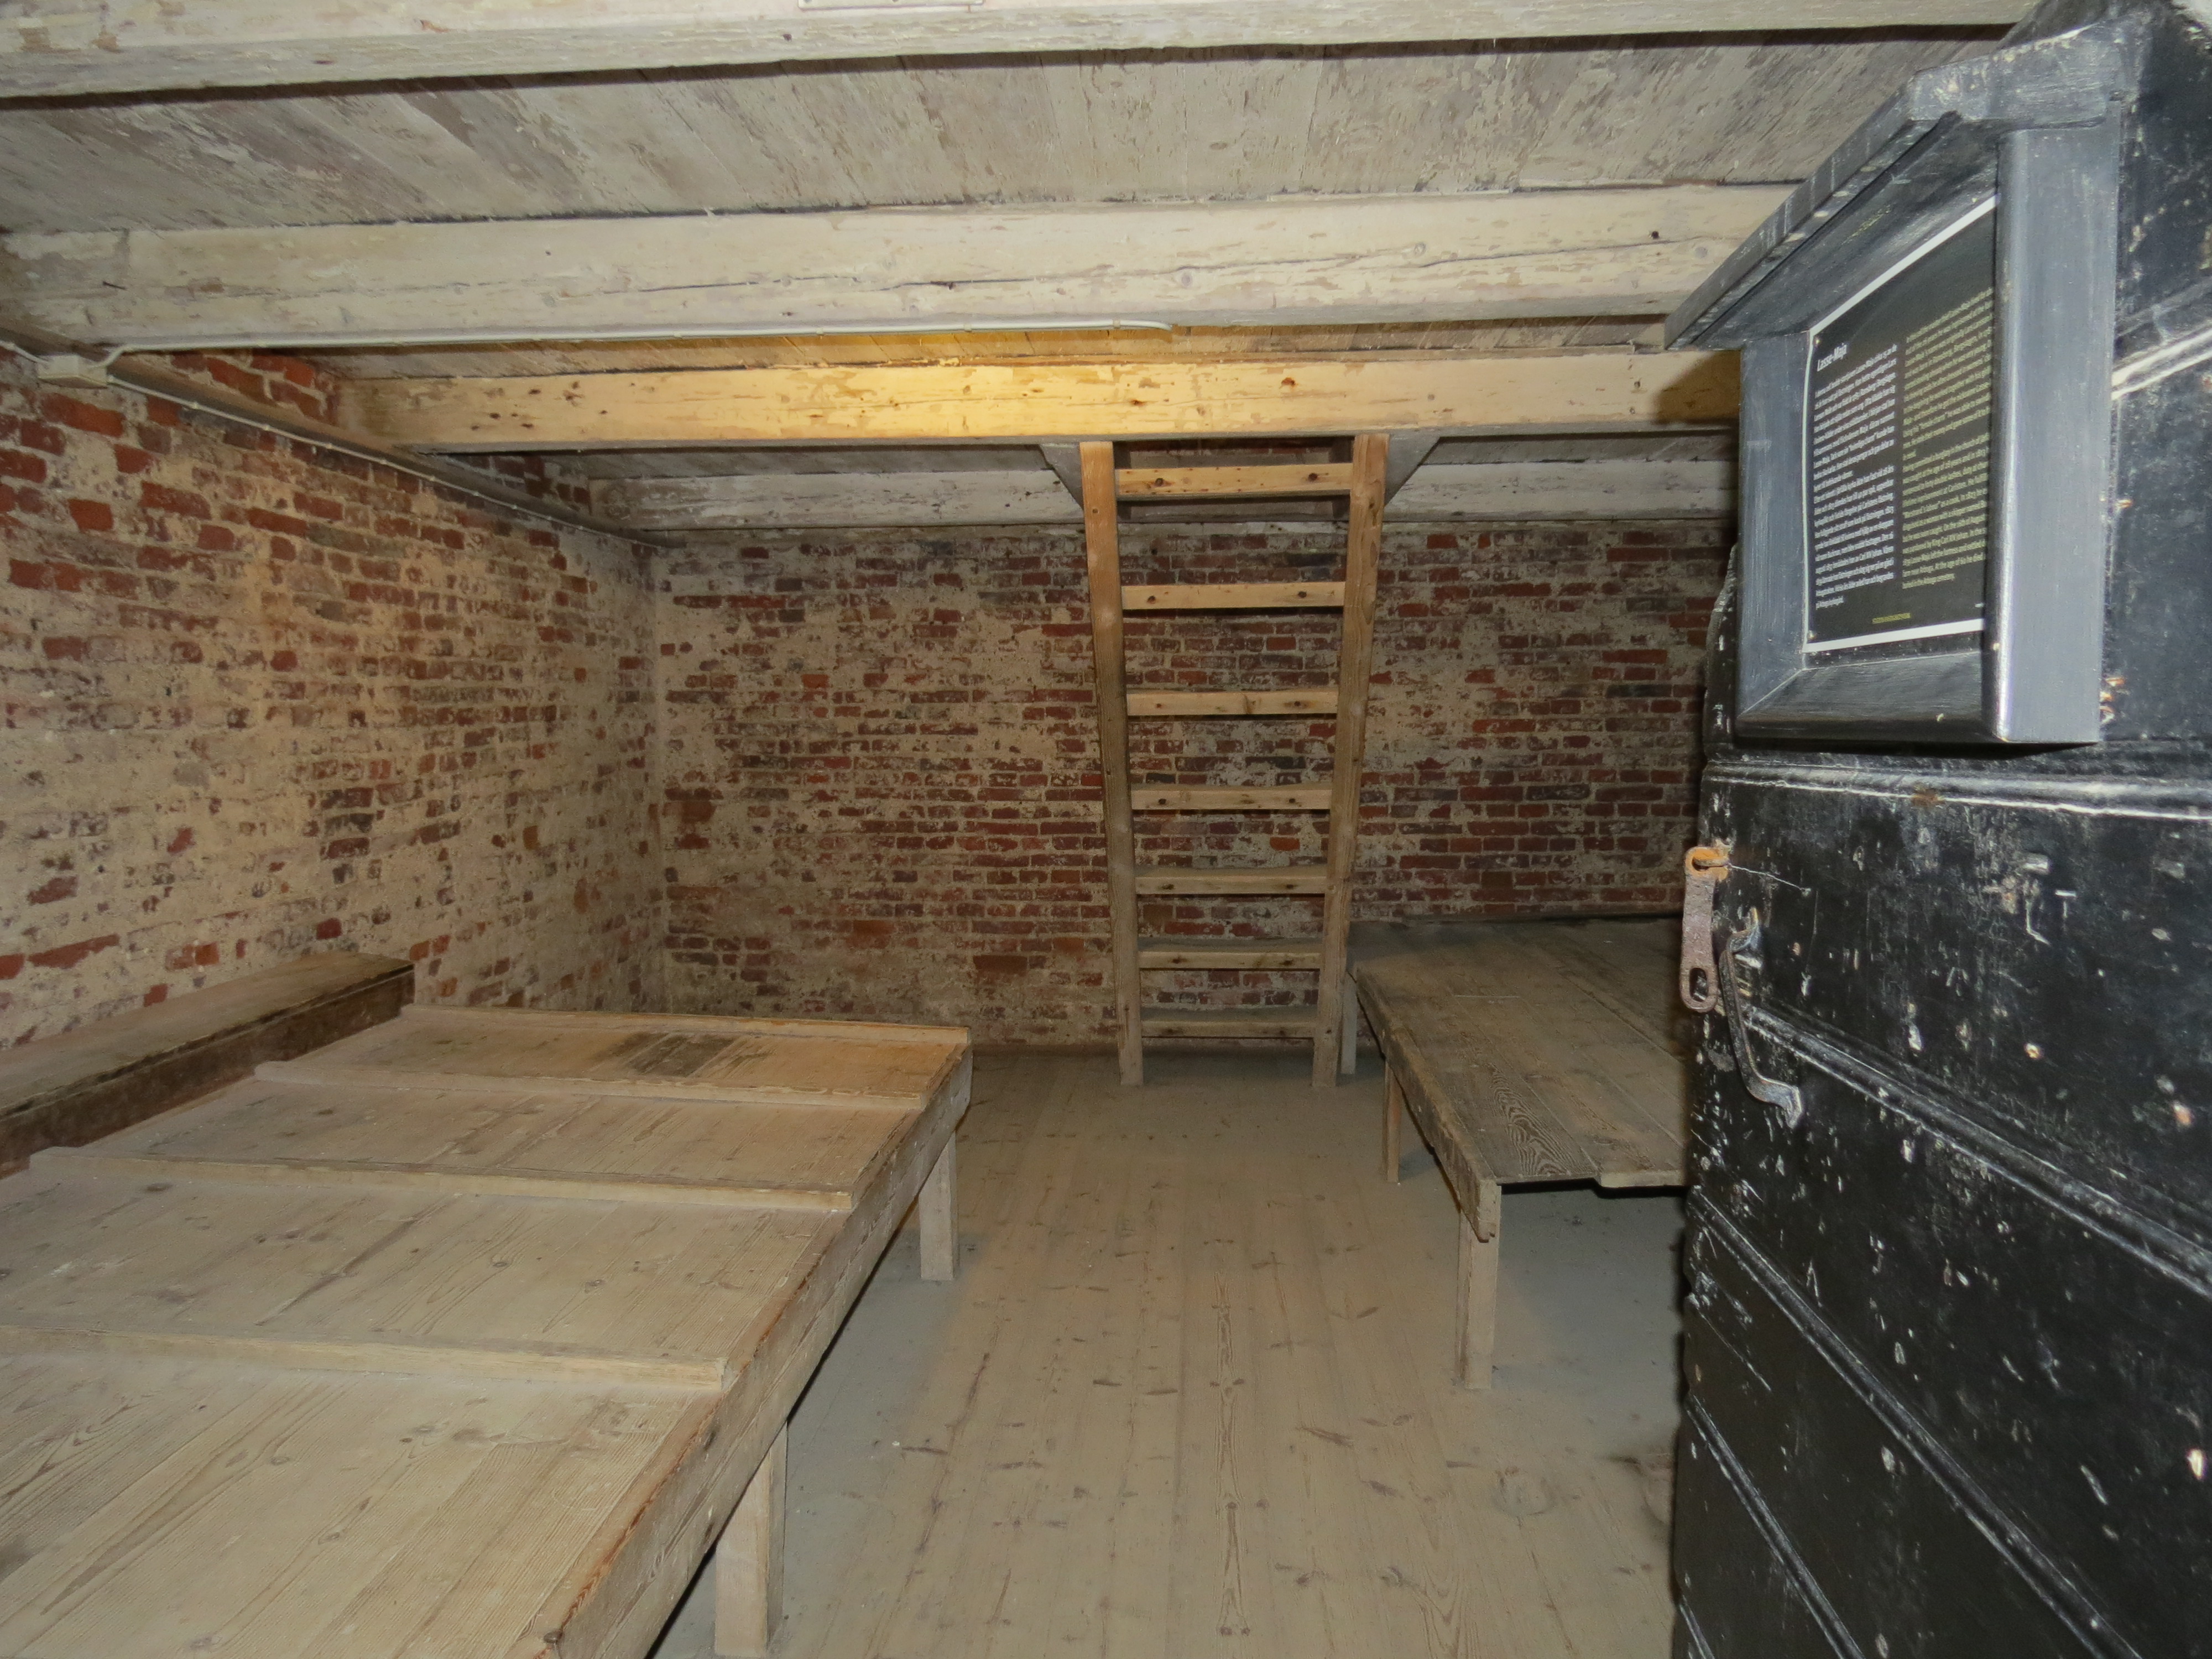 Væsen Symptomer Perfervid File:Prison cell of Lasse-Maja (2).JPG - Wikimedia Commons